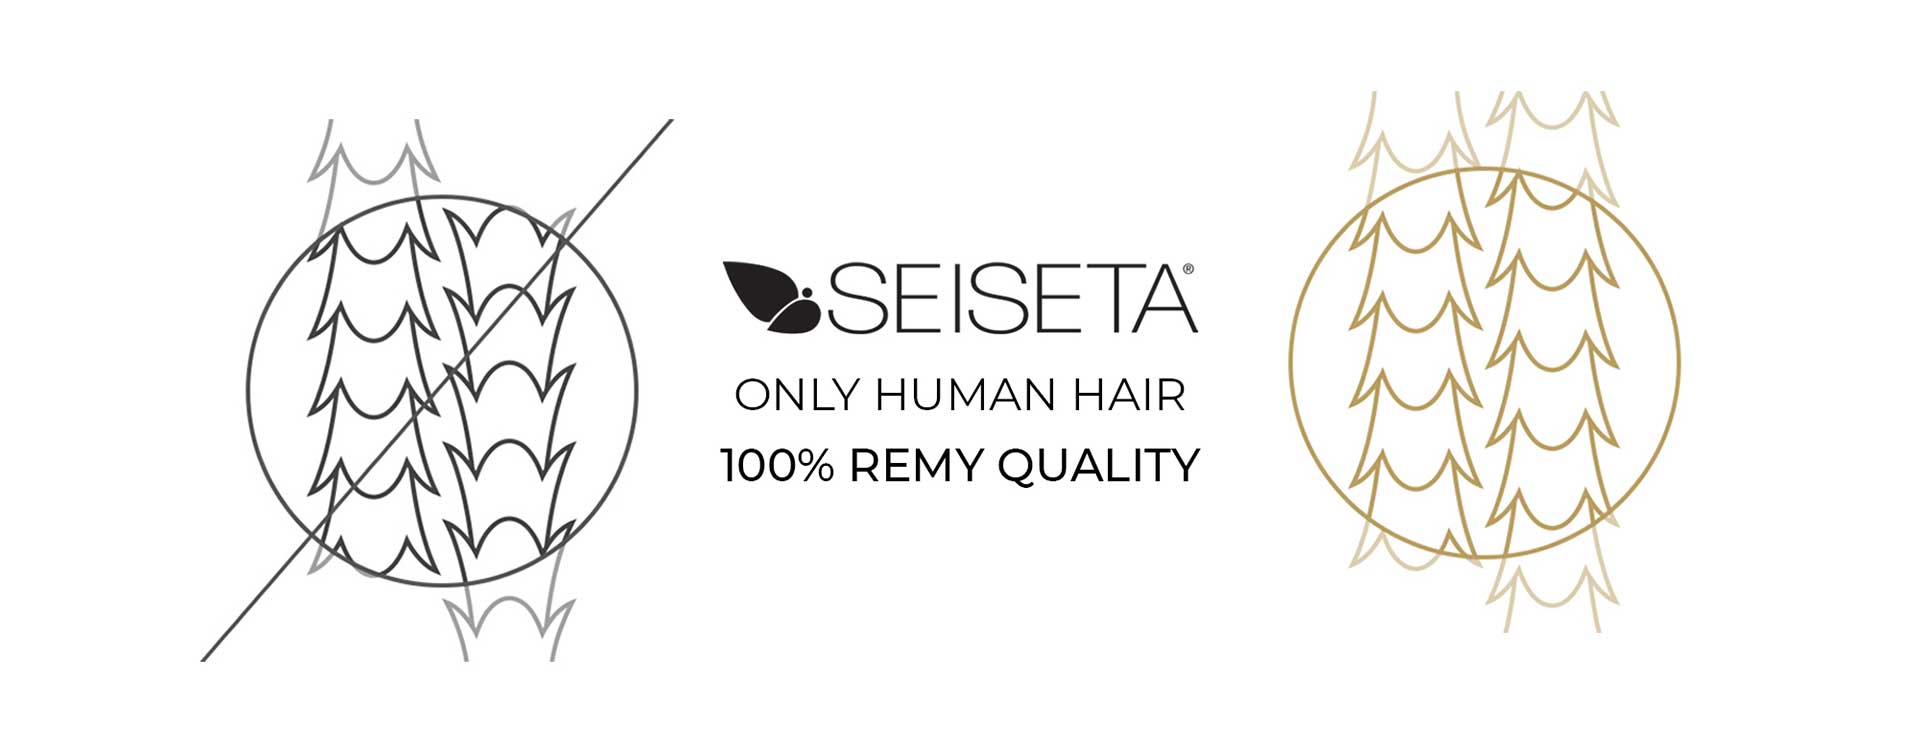 Seiseta, only human hair, 100% remy quality